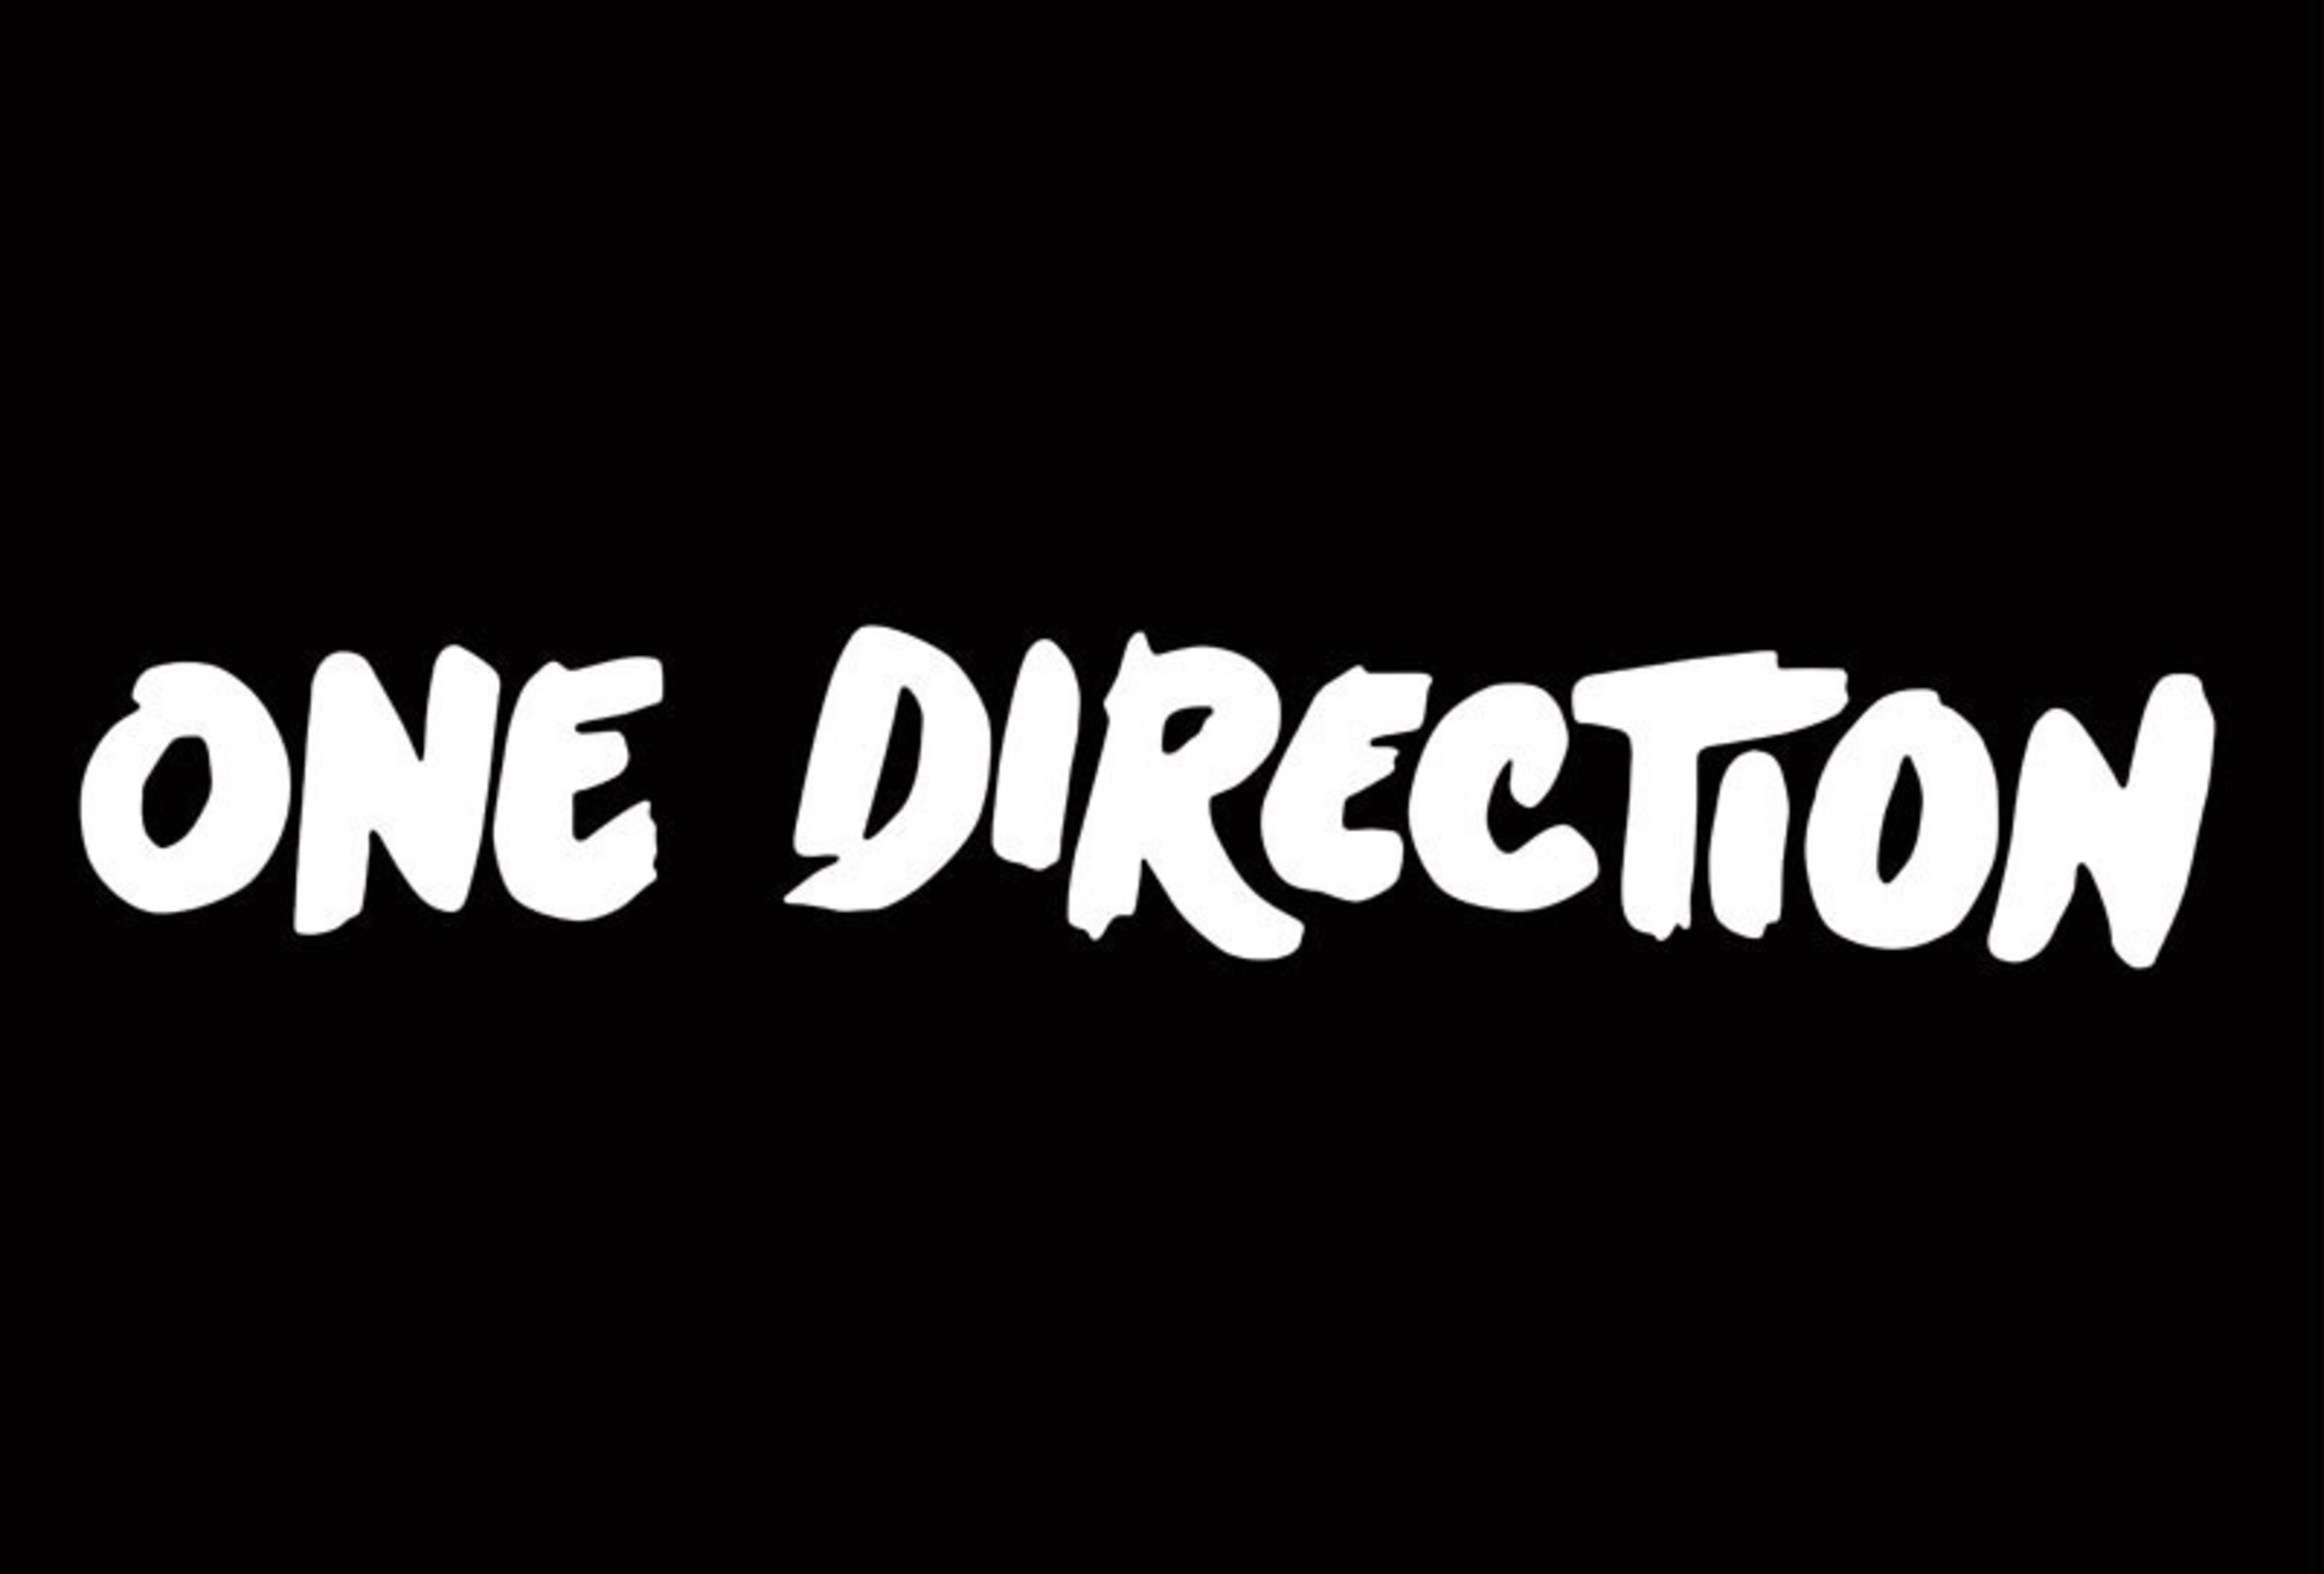 One Direction. (PRNewsFoto/Live Nation Entertainment) (PRNewsFoto/LIVE NATION ENTERTAINMENT)